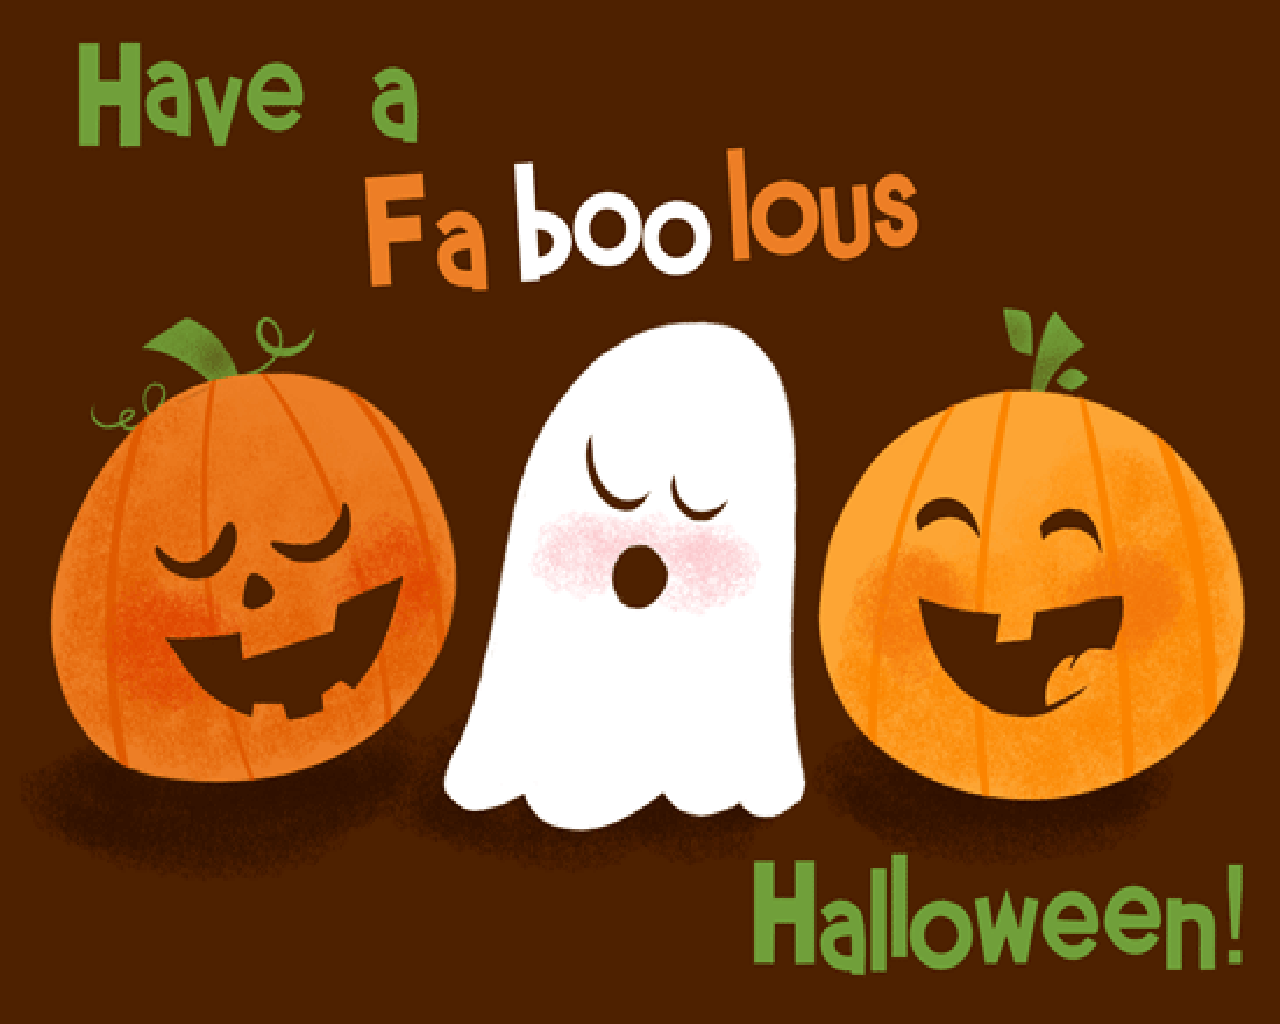 Halloween Ghost And Pumpkin Cartoon Desktop Wallpaper Background Cute  Halloween Picture Wallpaper Background Image And Wallpaper for Free Download